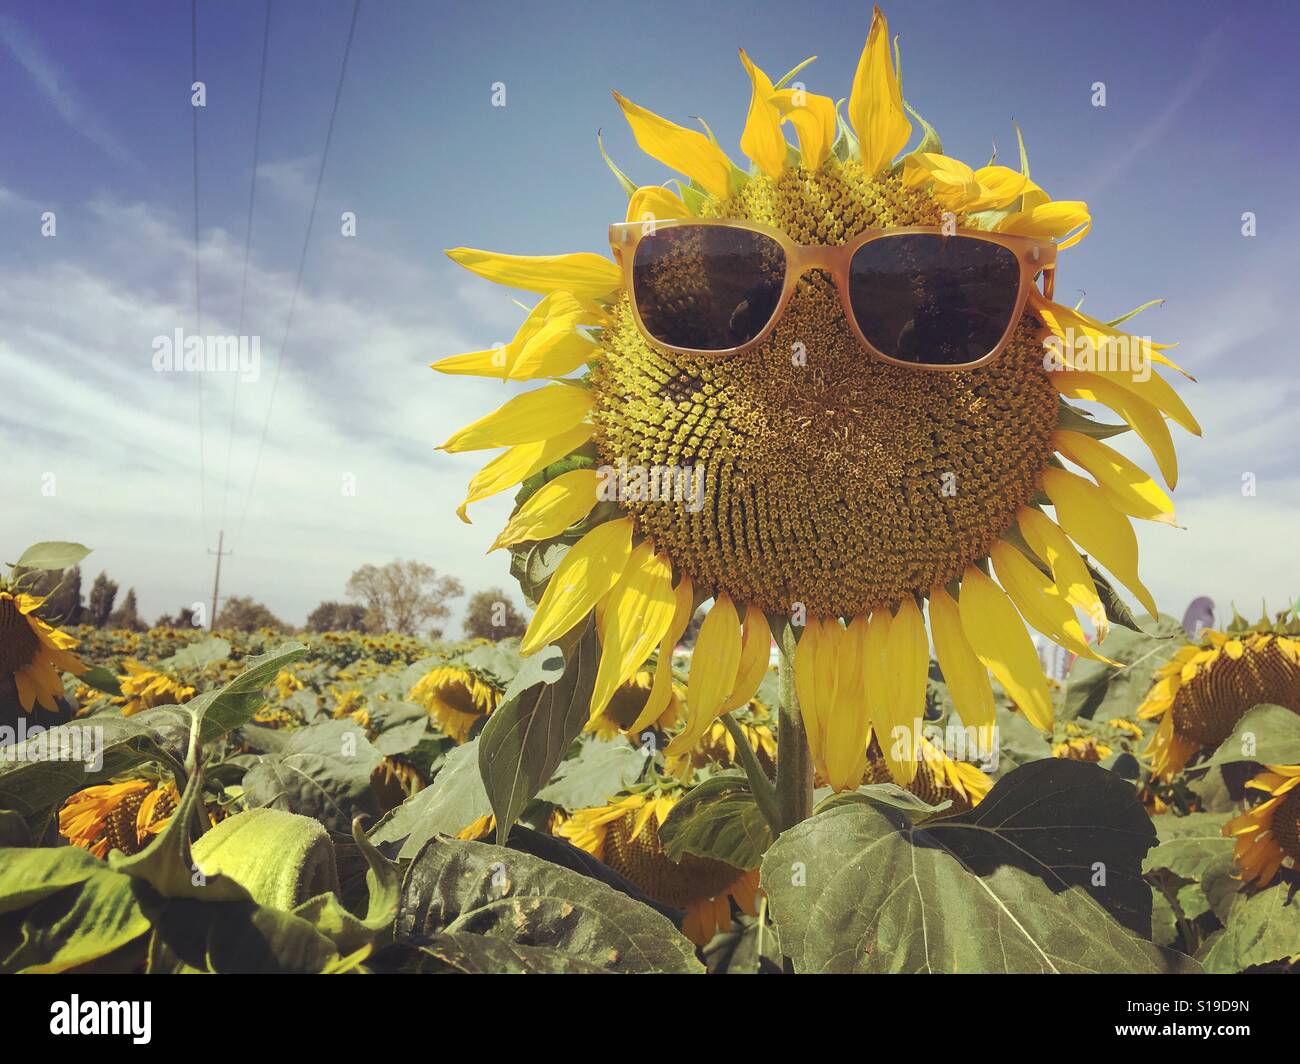 Sunflower with sunglasses Stock Photo